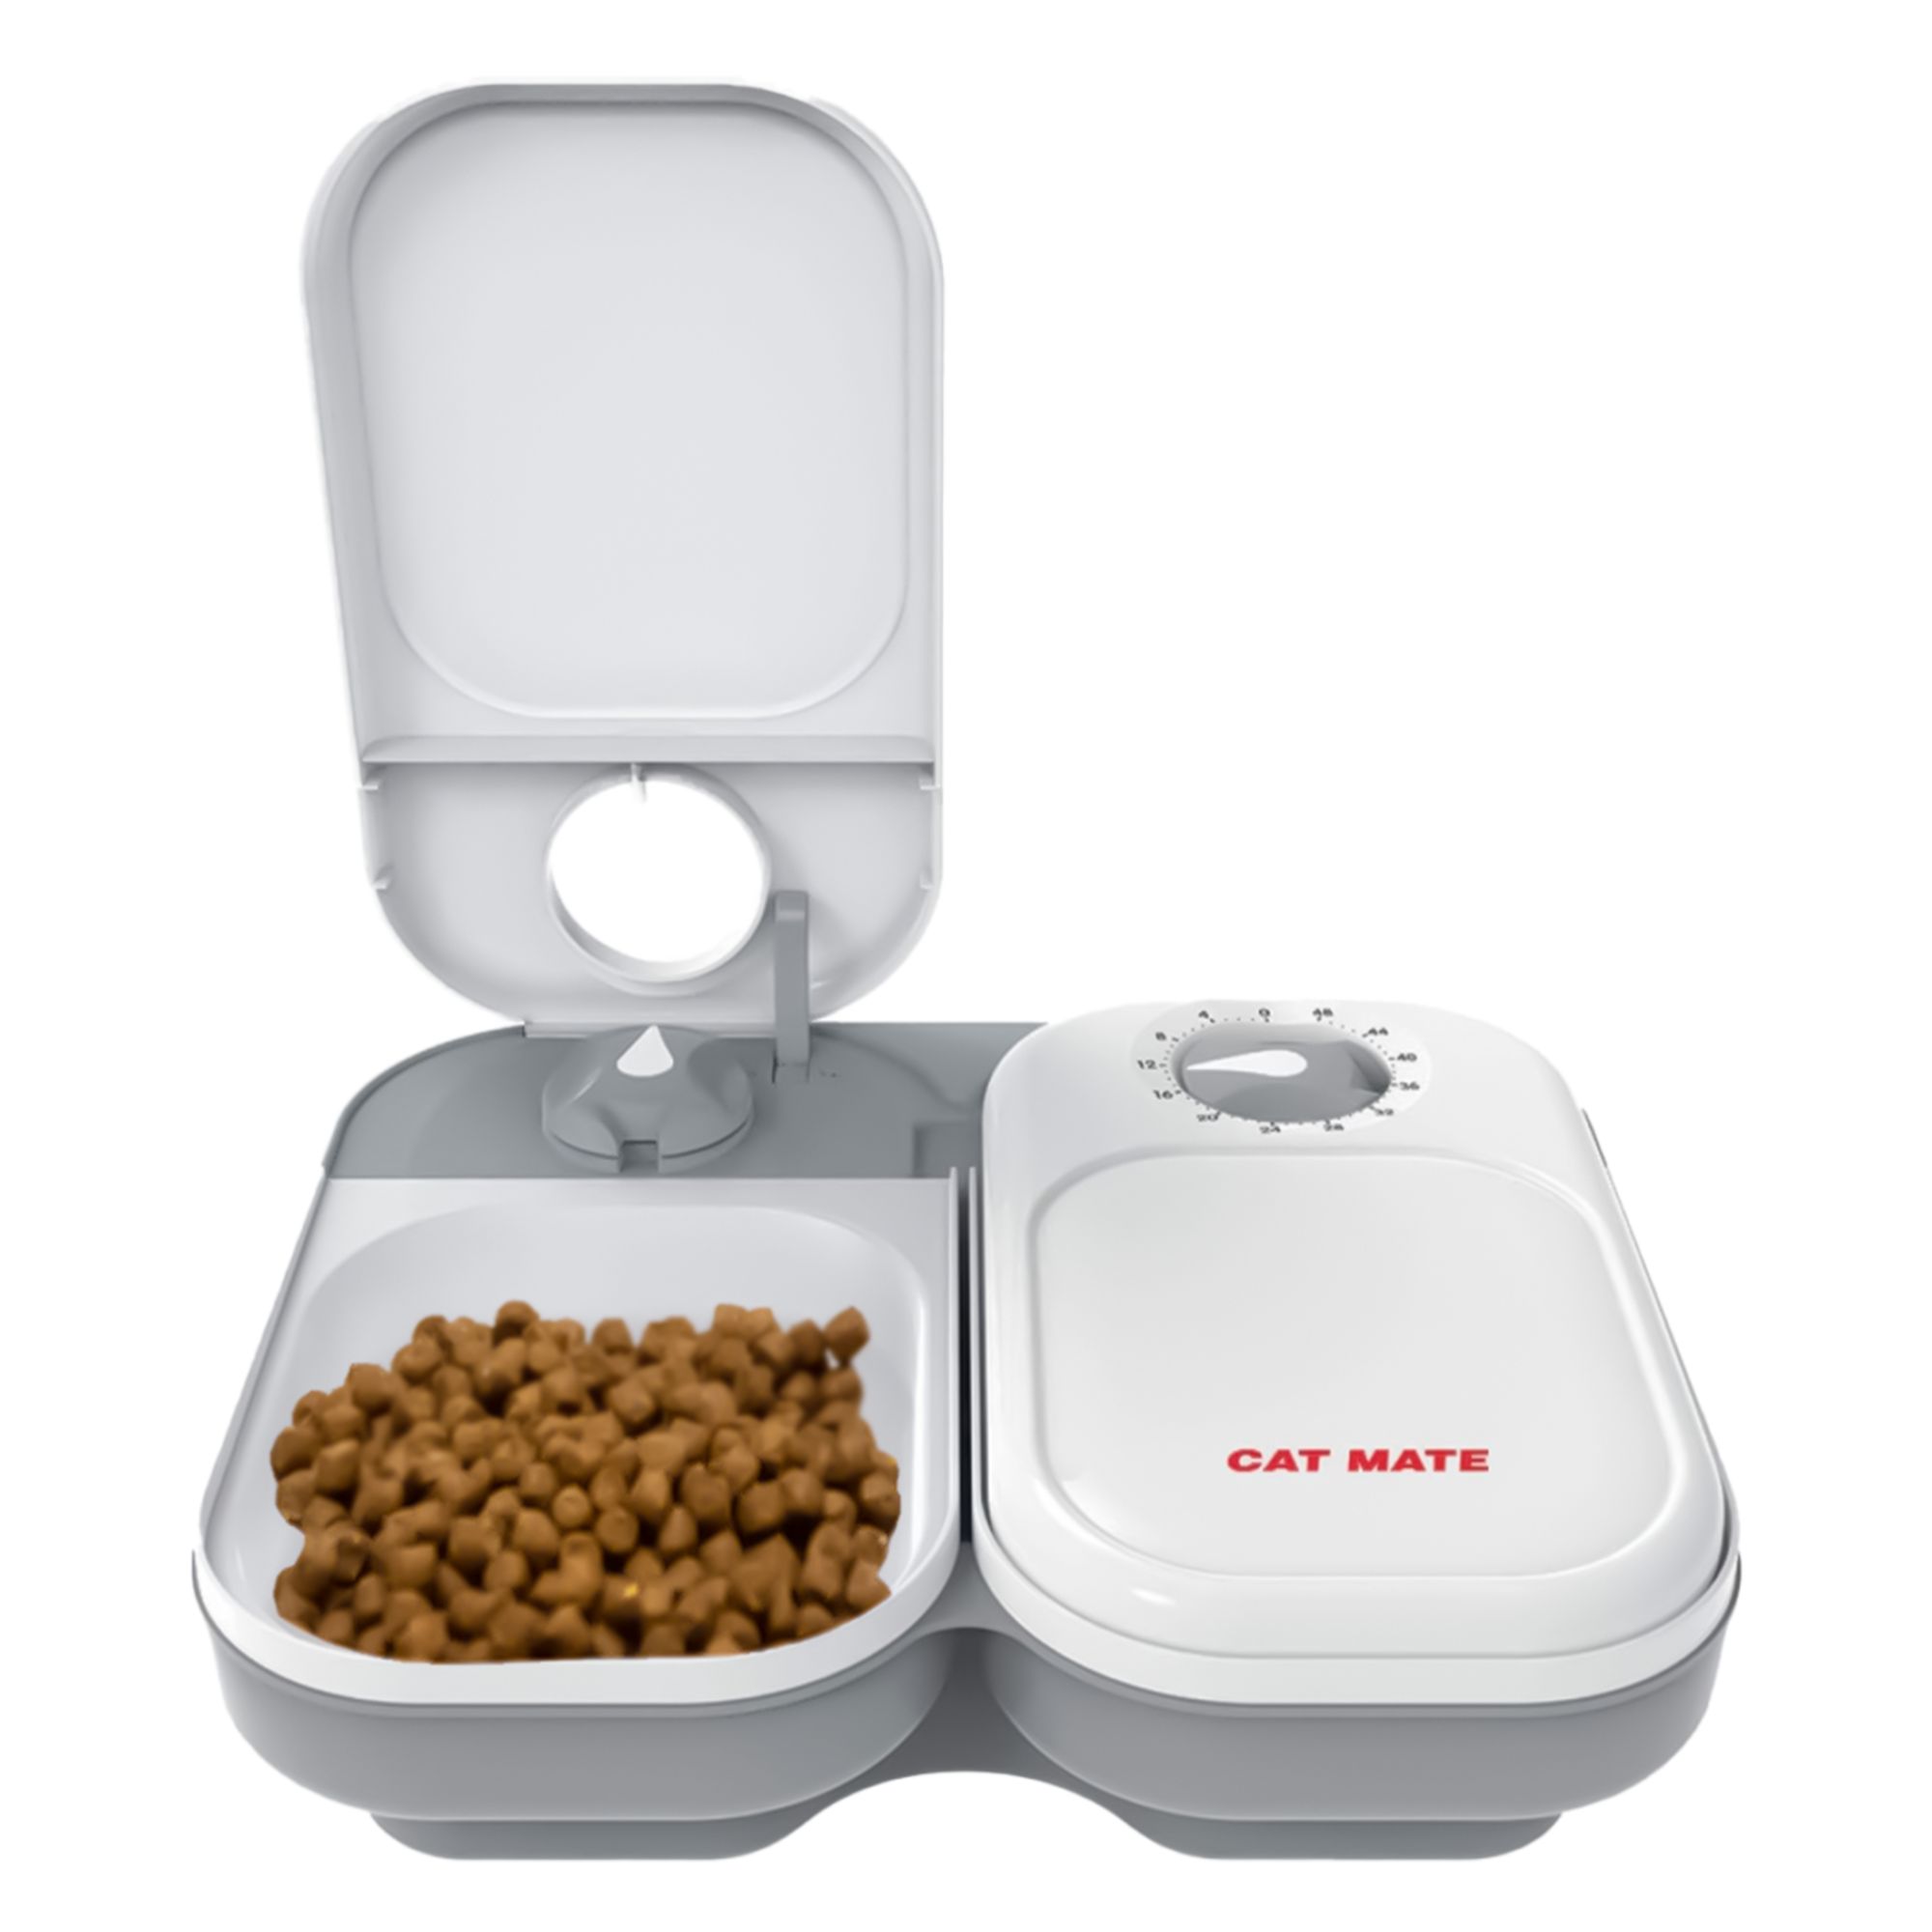 Pet Supplies : Icwin Automatic Dog Feeder, Dog Food Dispenser